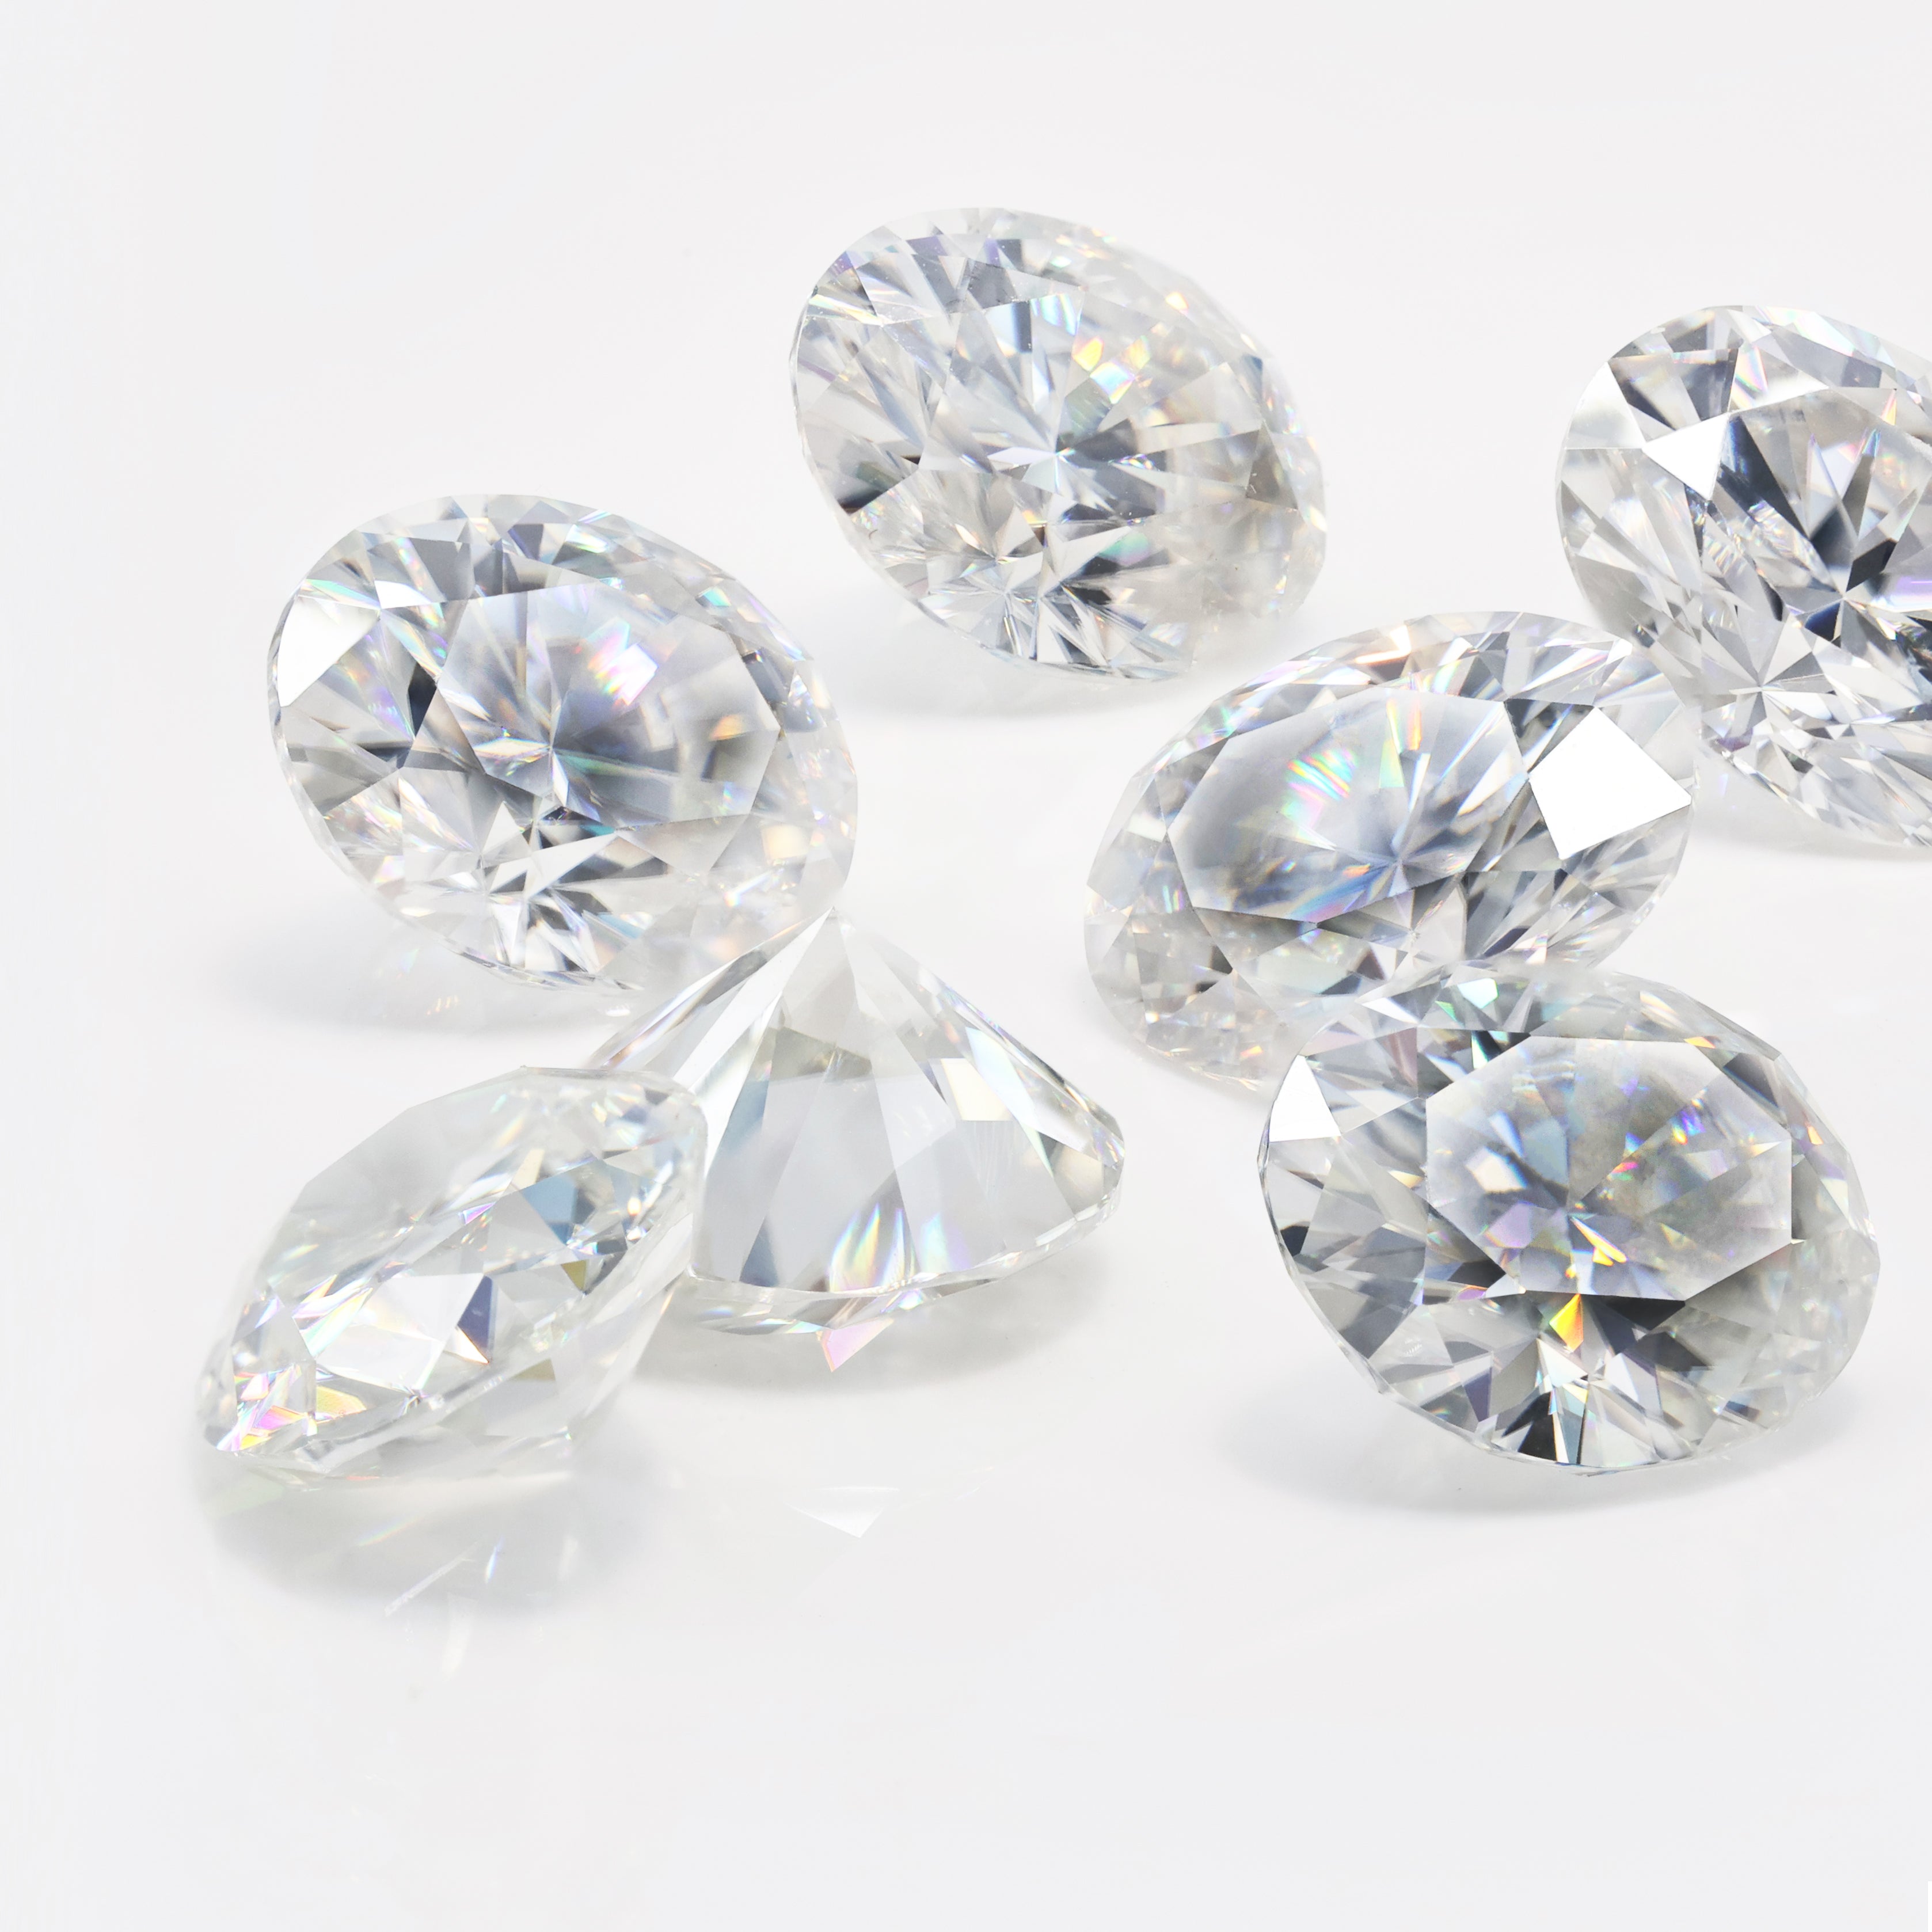 Oval Perfect Polished Oval Cut Moissanite Diamond